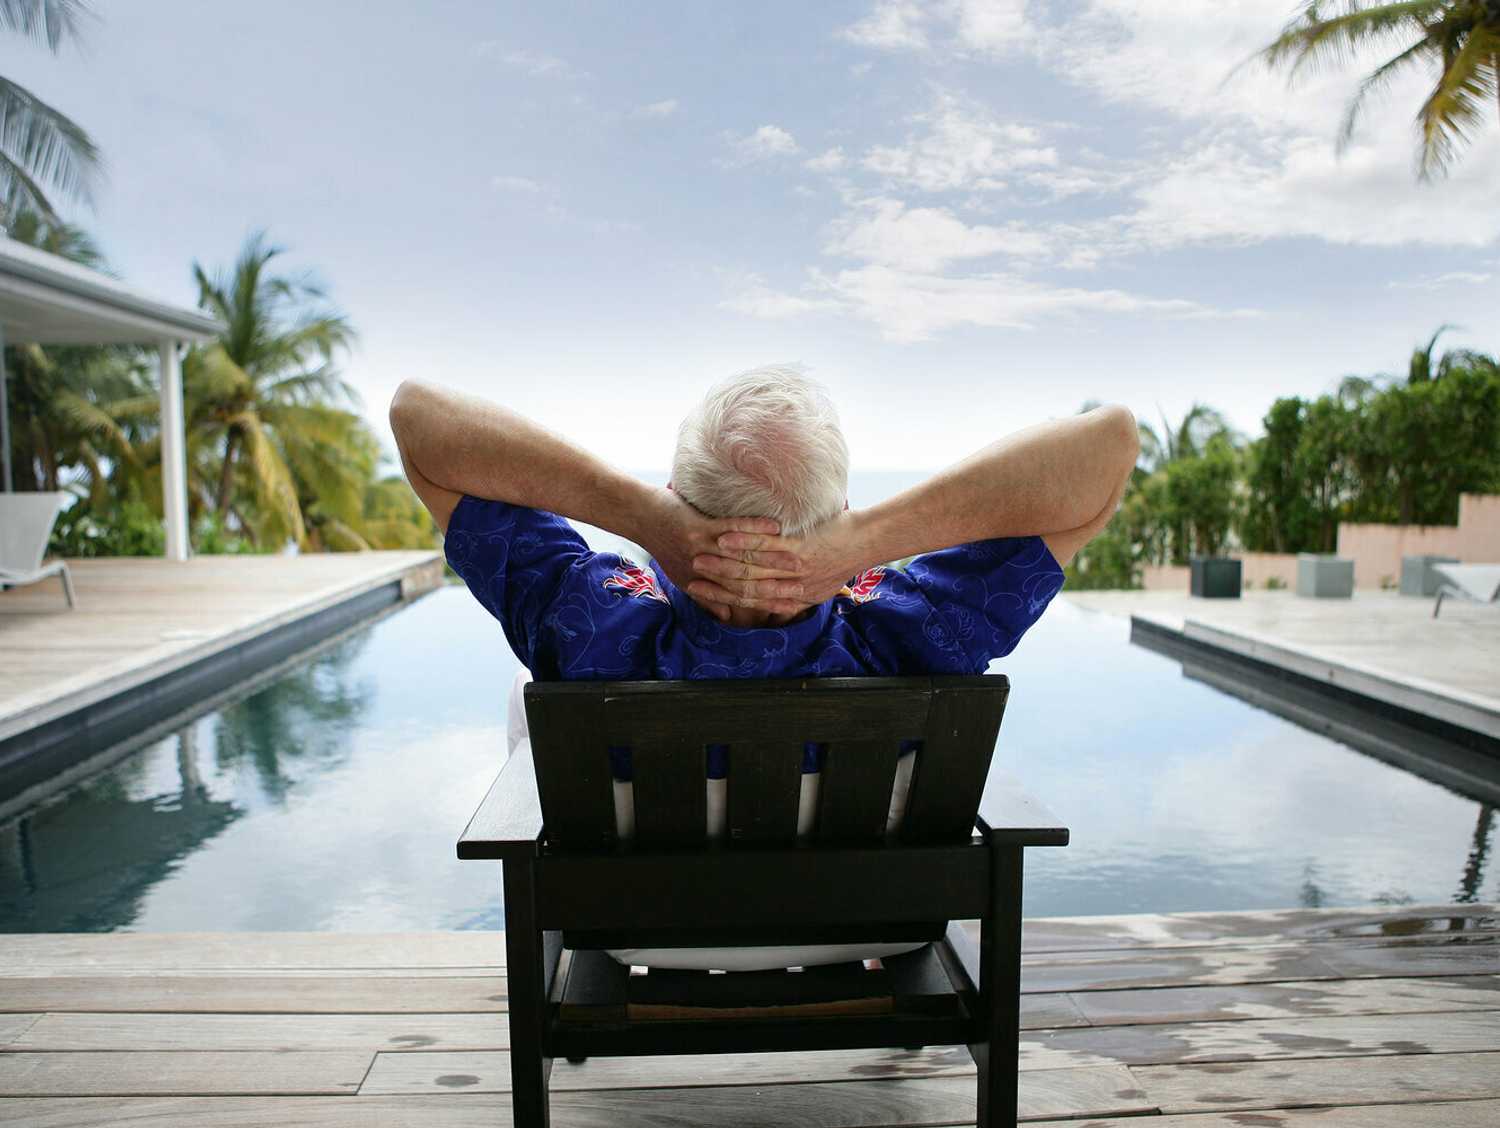 Where Should You Retire?